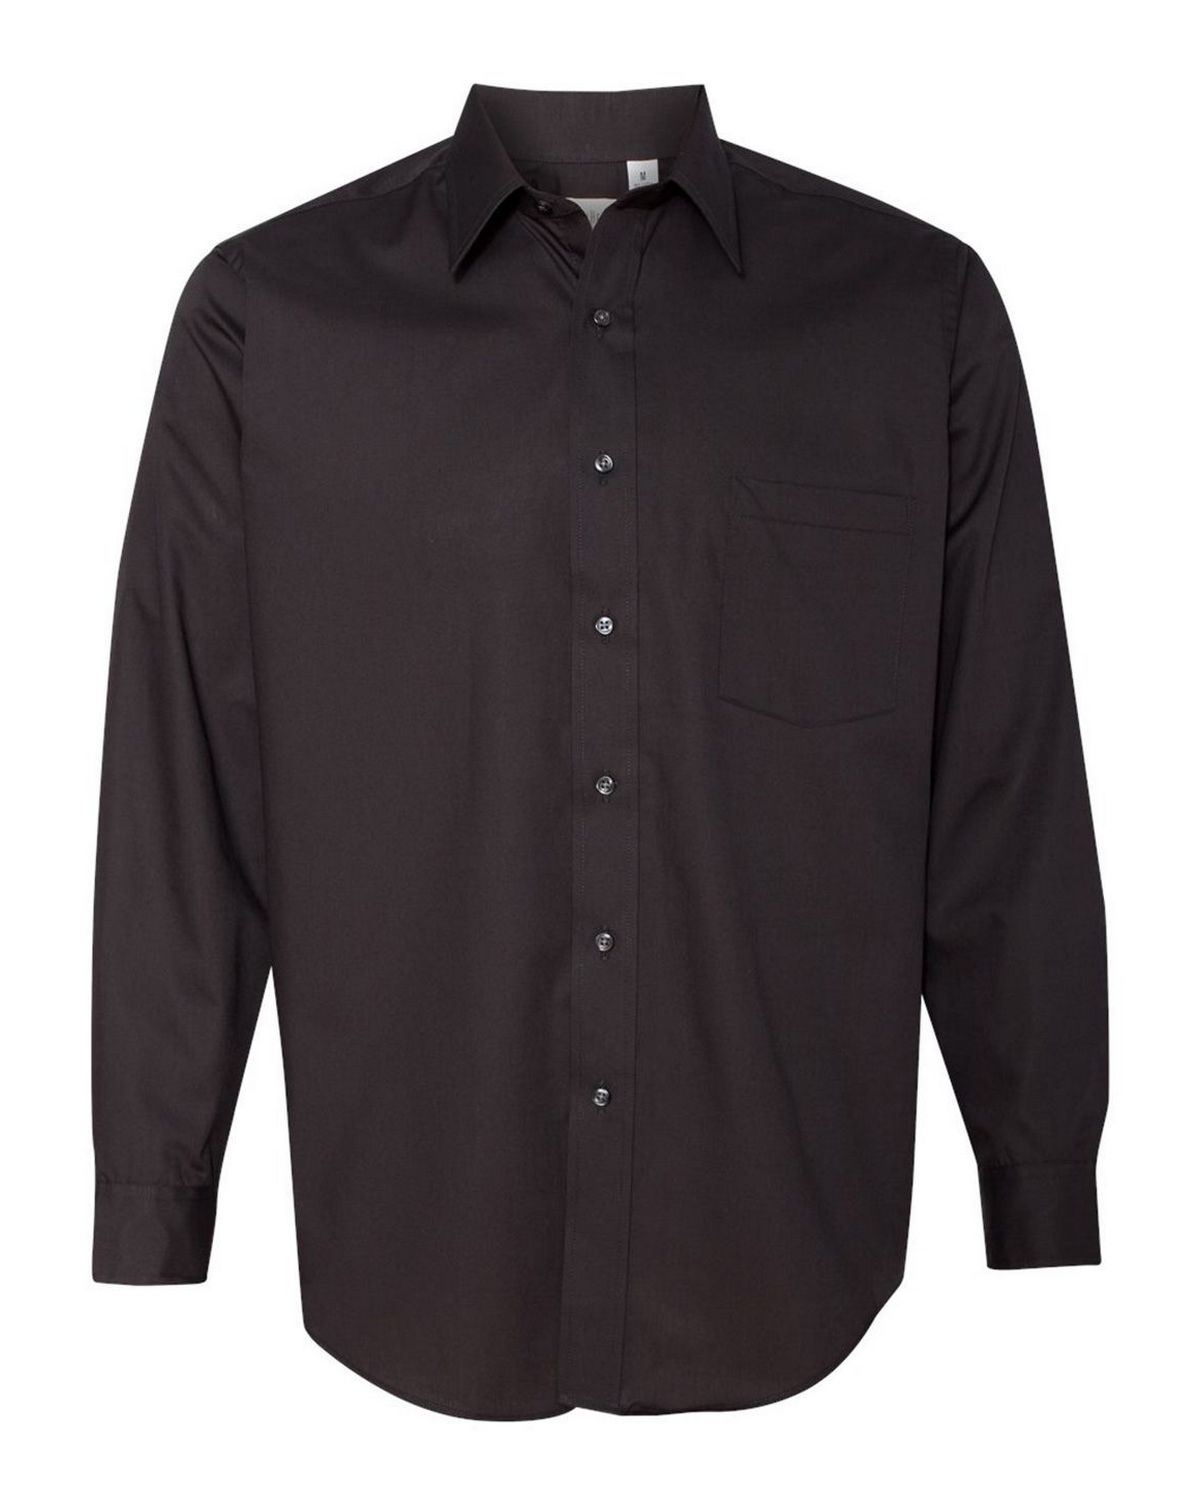 Van Heusen 13V0214 Broadcloth Long Sleeve Shirt